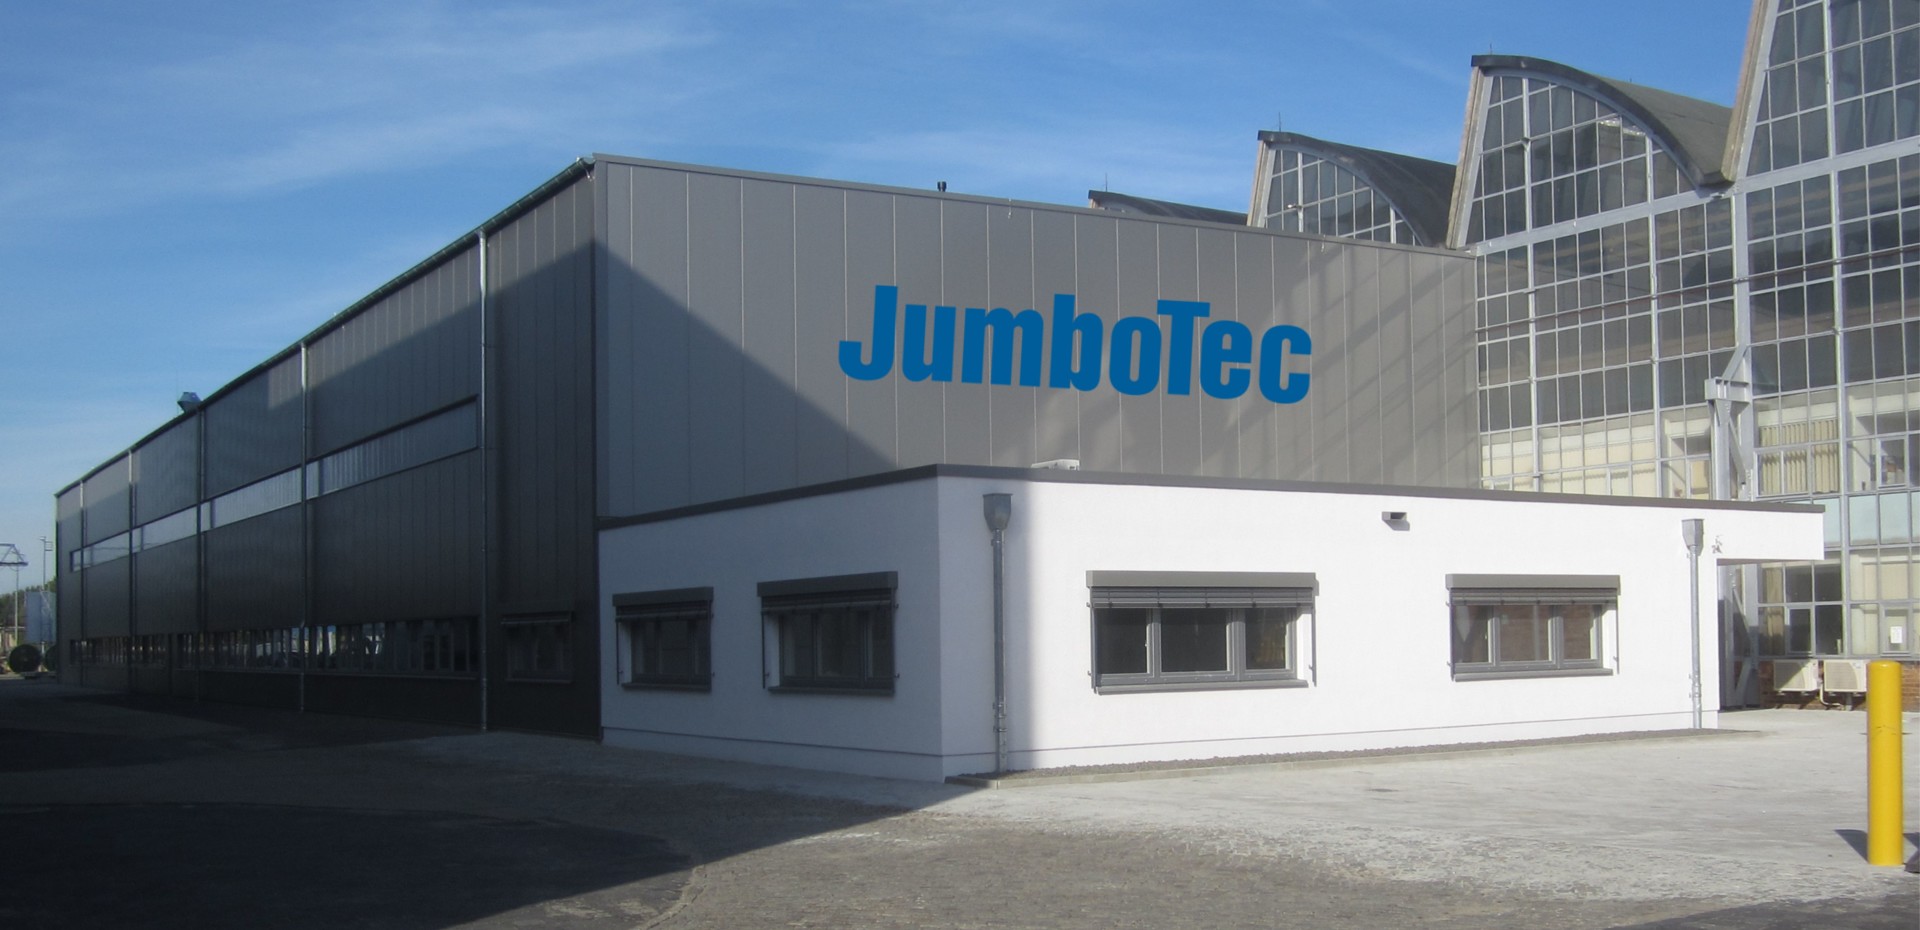 Instandhaltung Schienenfahrzeuge Firmengebäude JumboTec